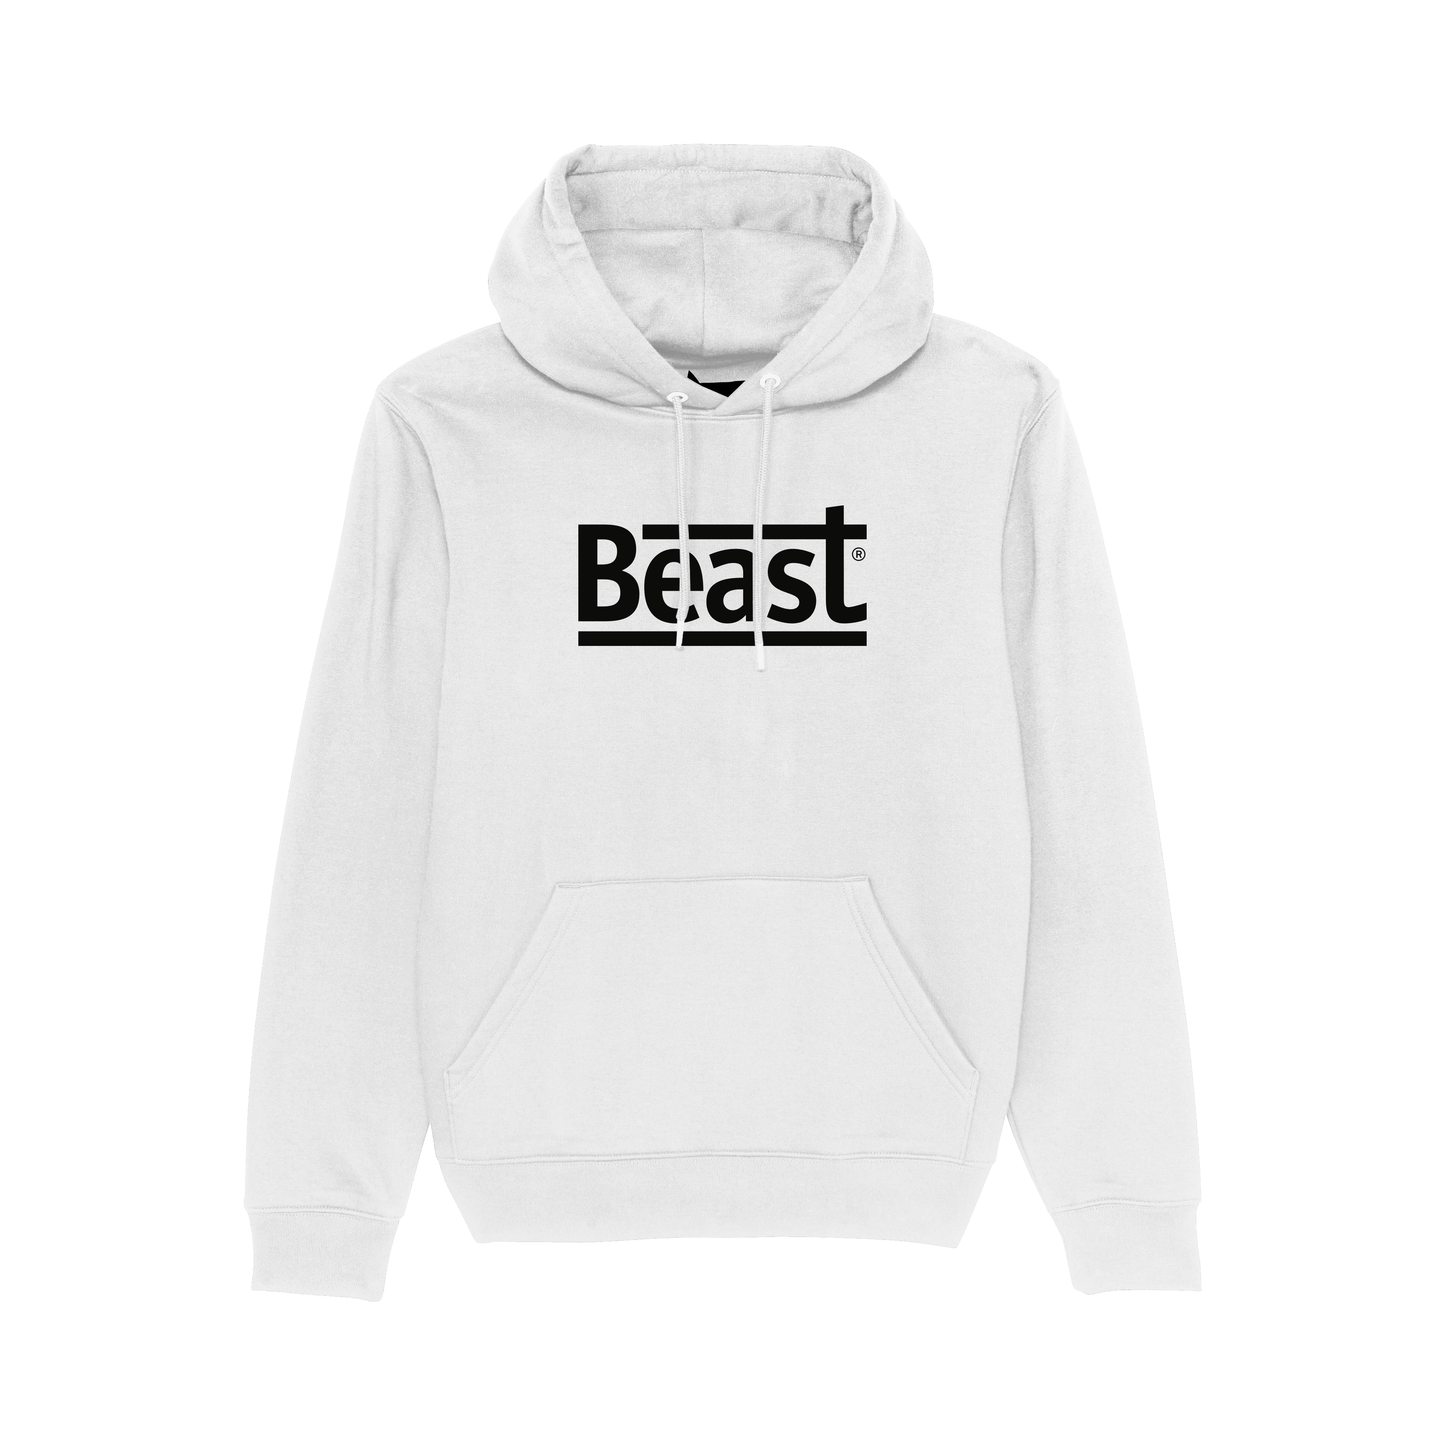 Beast hoodie White